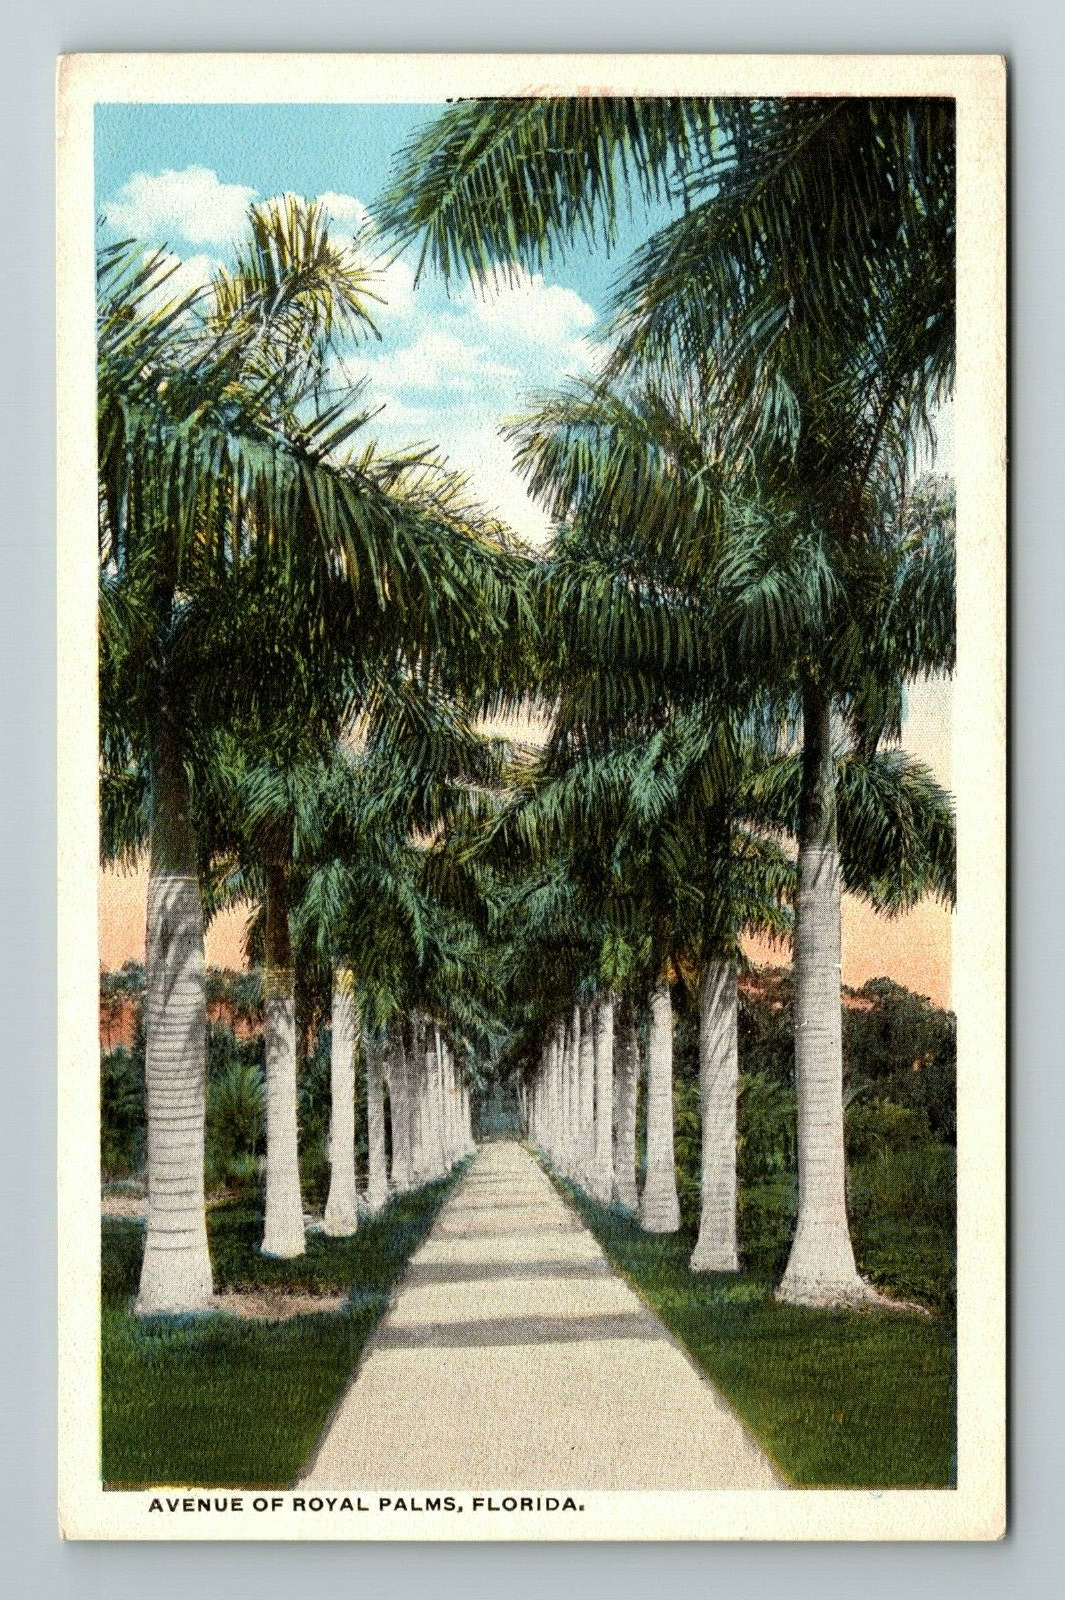 FL-Florida, Avenue Royal Palms, Scenic Path View, Vintage Postcard